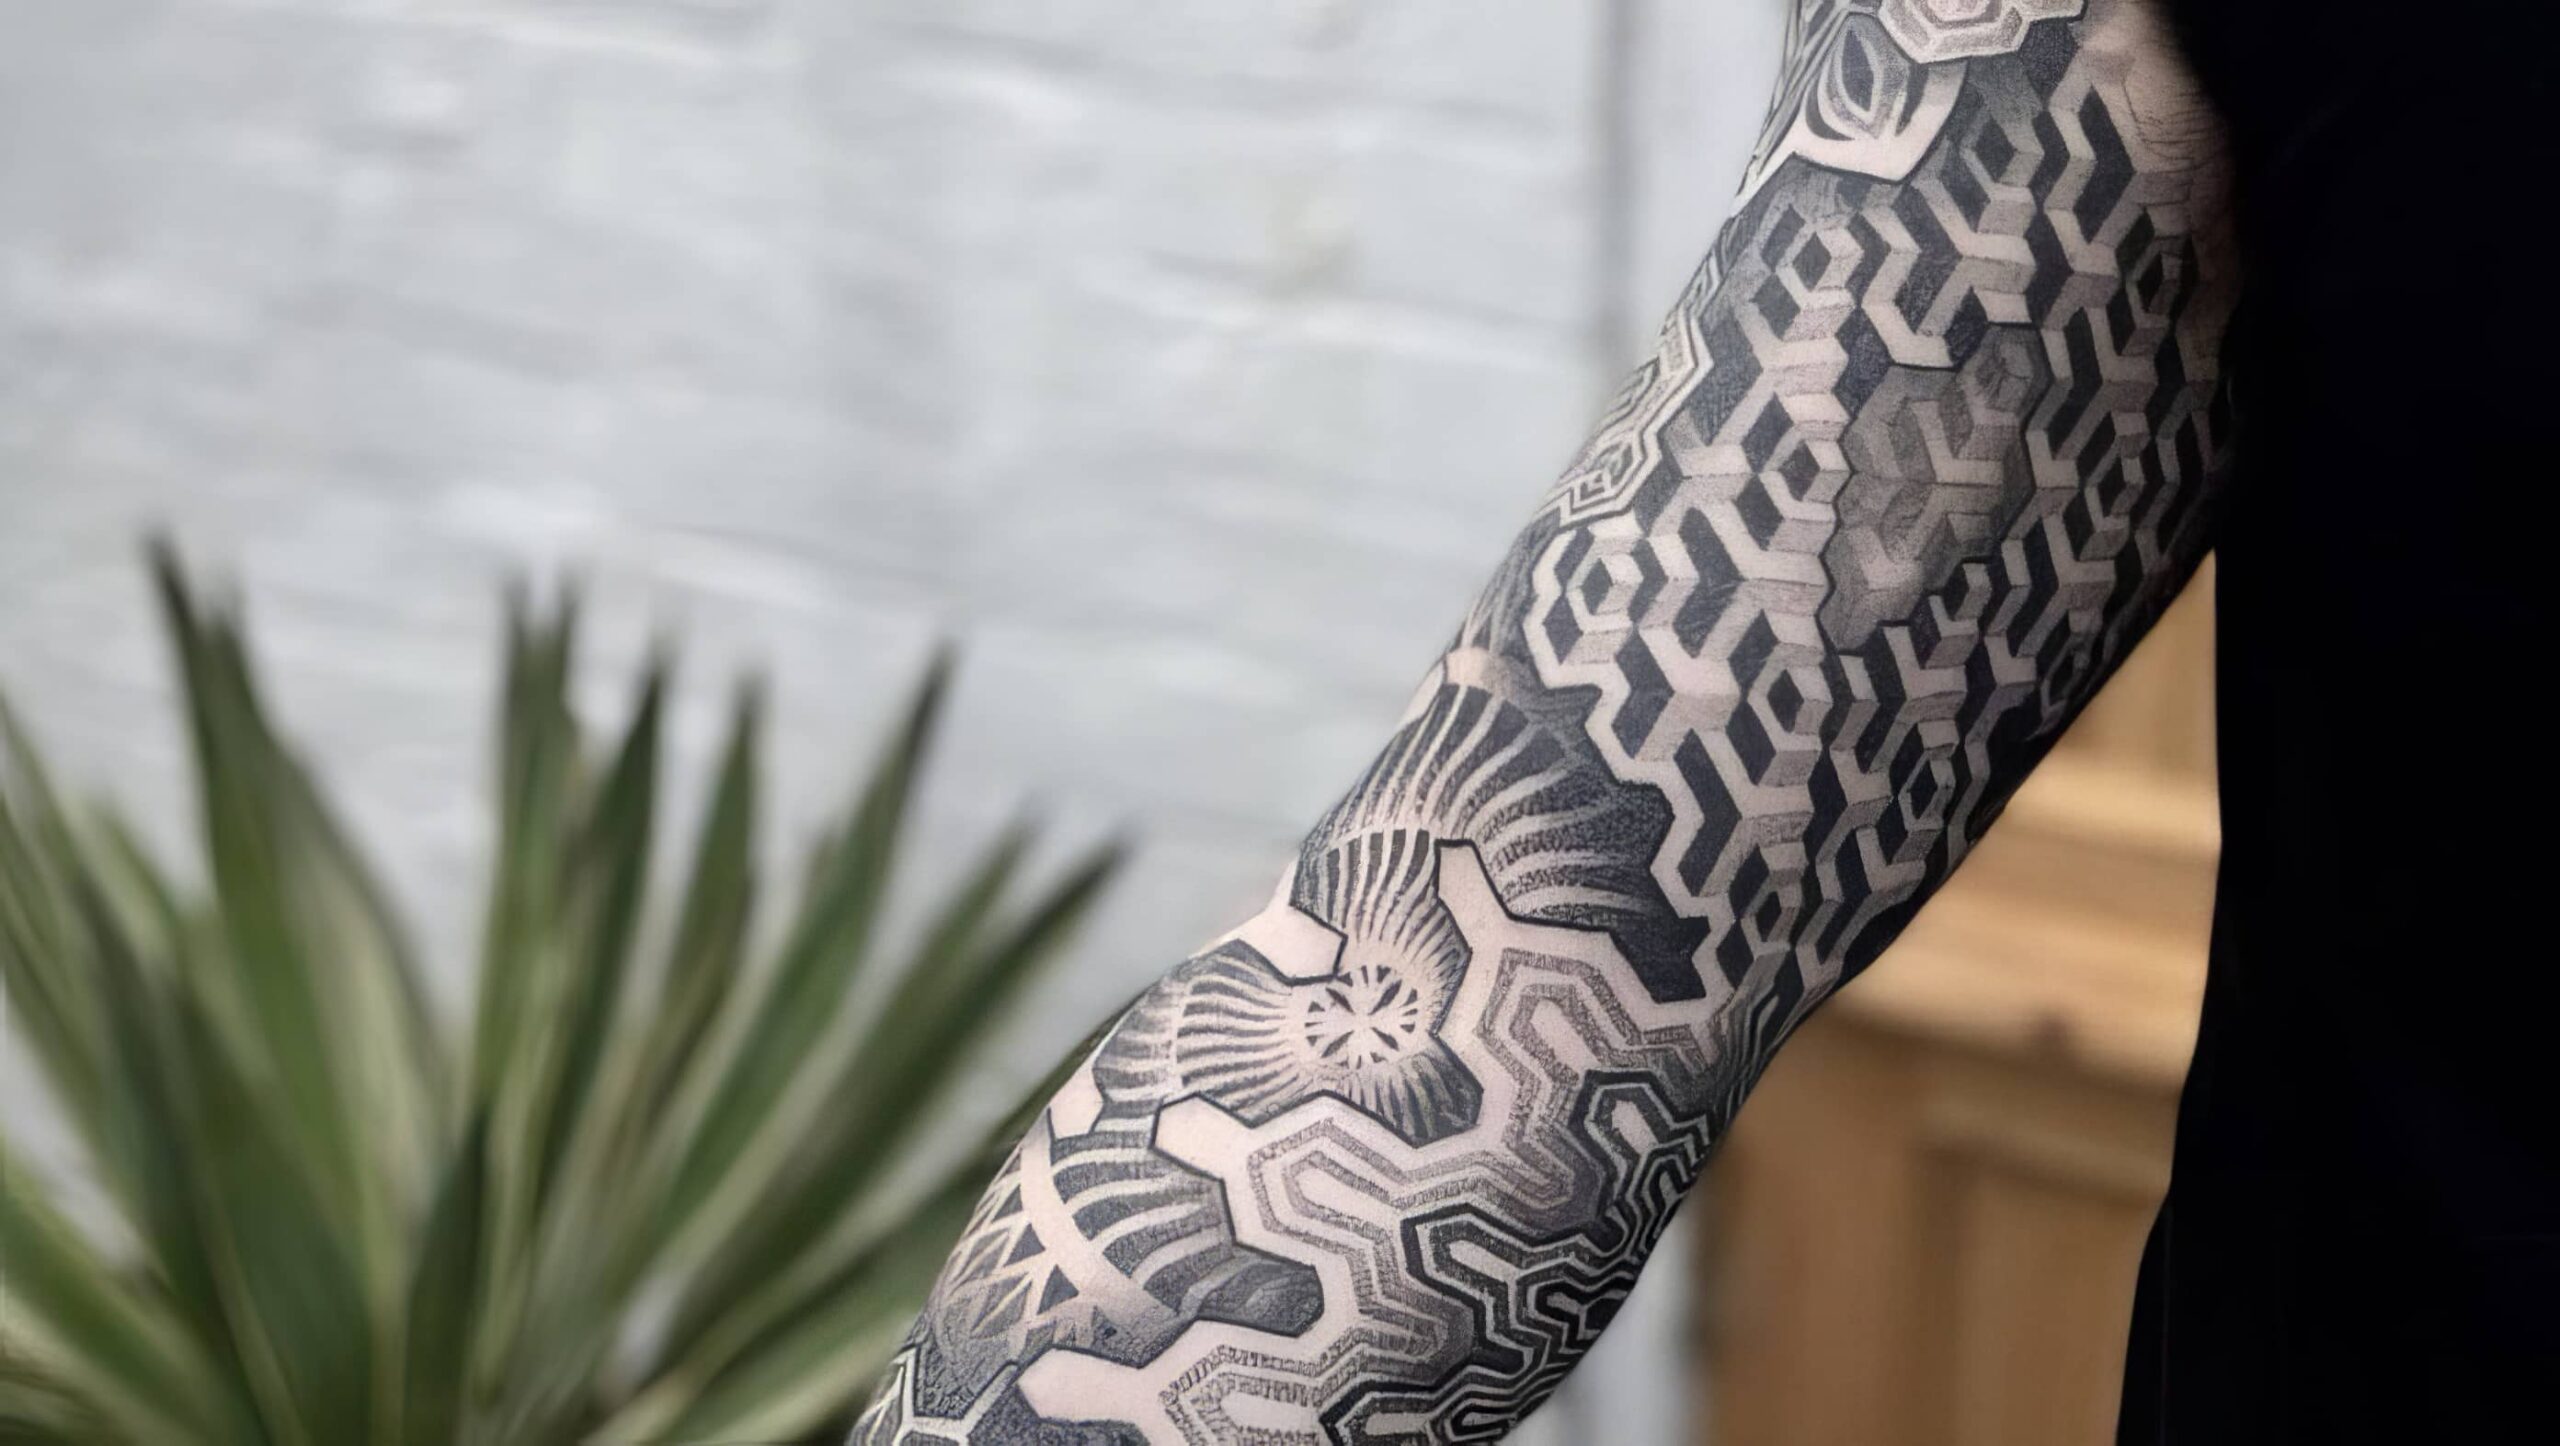 150+ Cover Up Tattoo Ideas: Transform Tattoo Regrets Into Cool New Designs